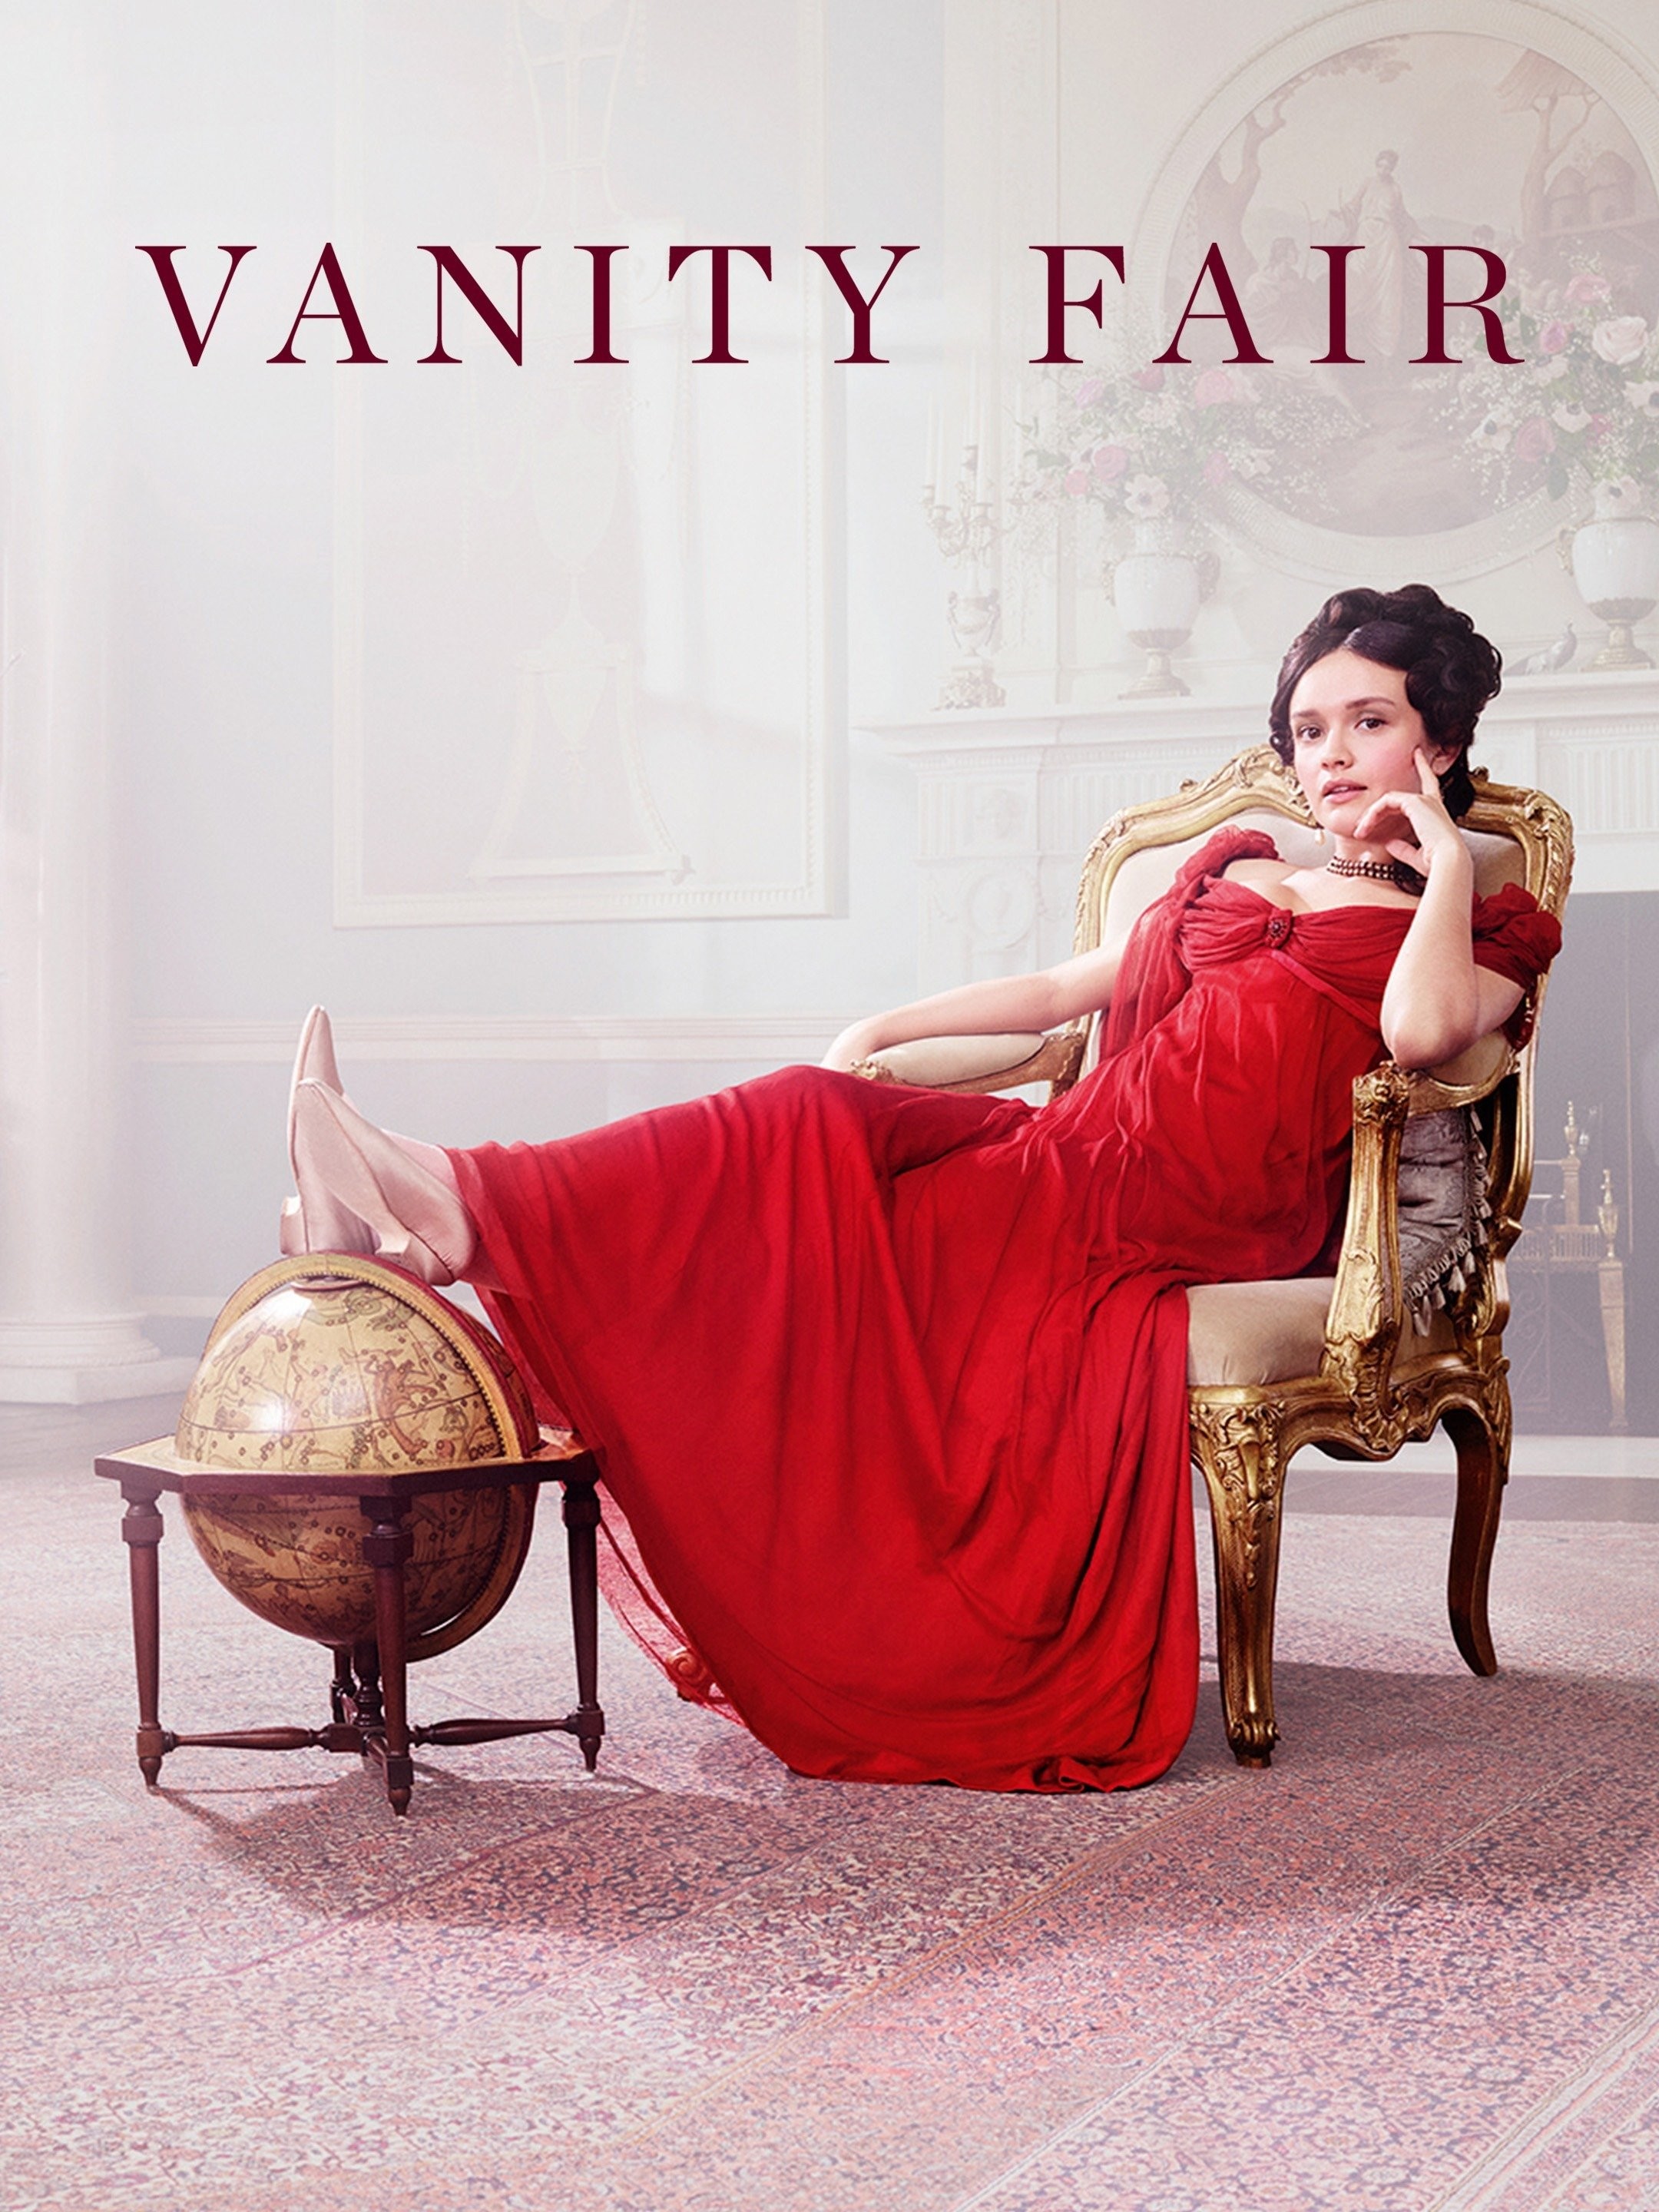 Vanity Fair August 2021 Feature